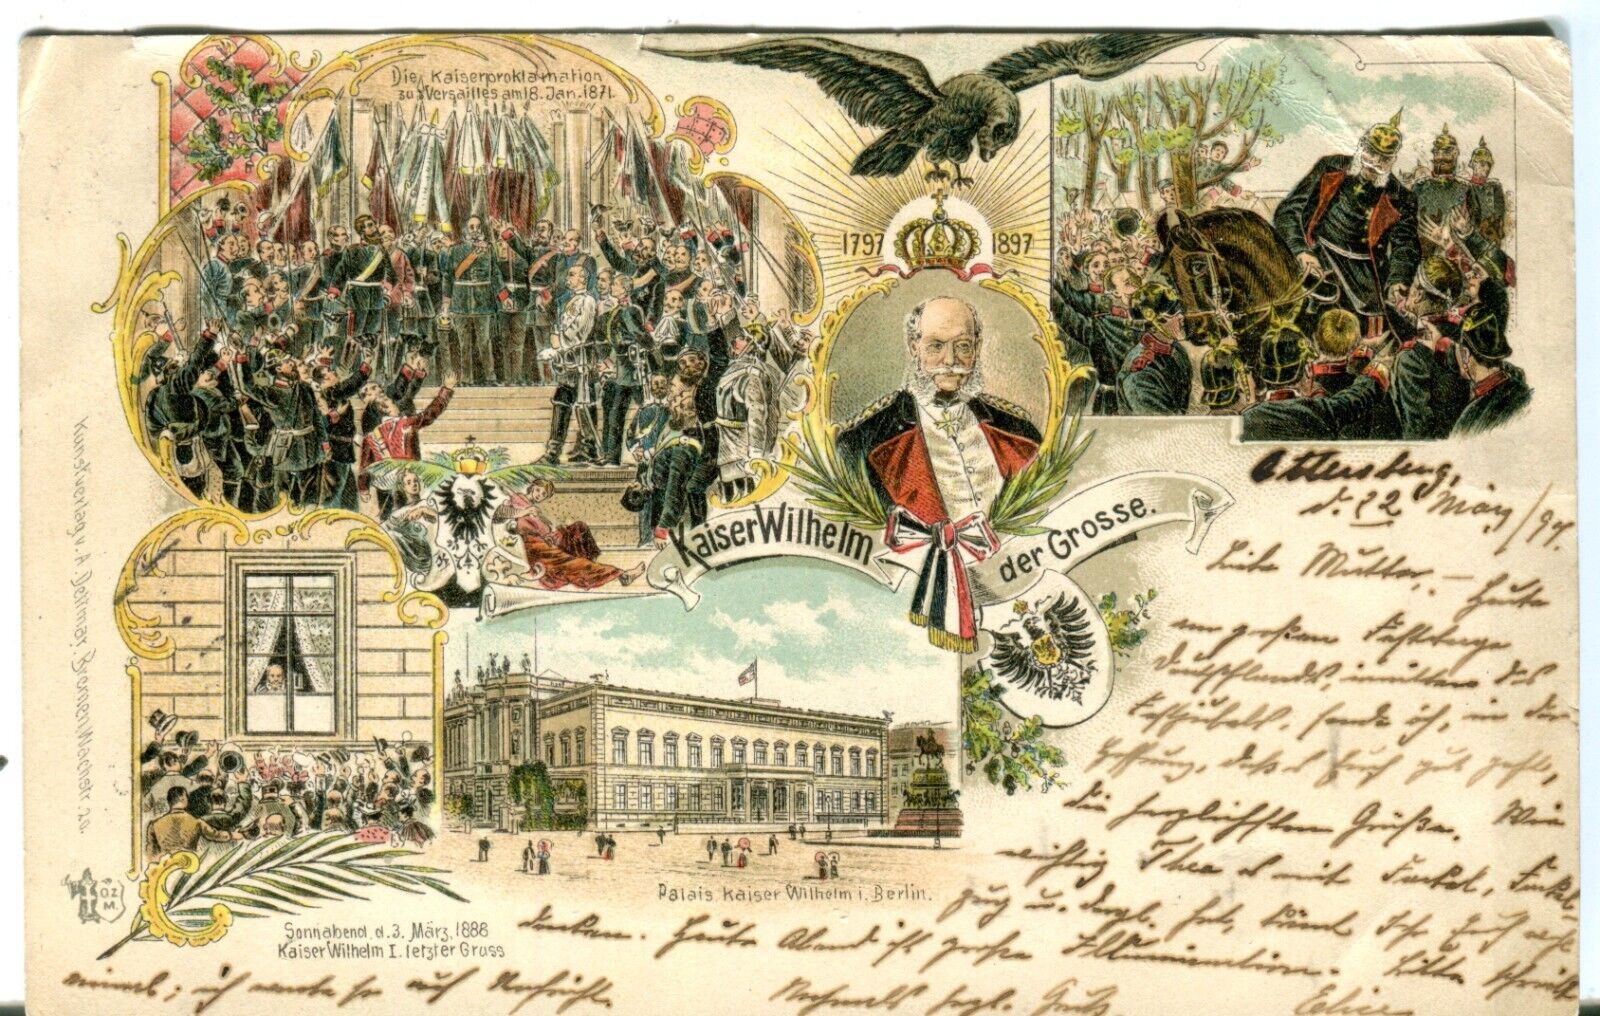 Germany AK Kaiser Wilhelm der Grosse bicentennial anniversary 1897 cover to USA